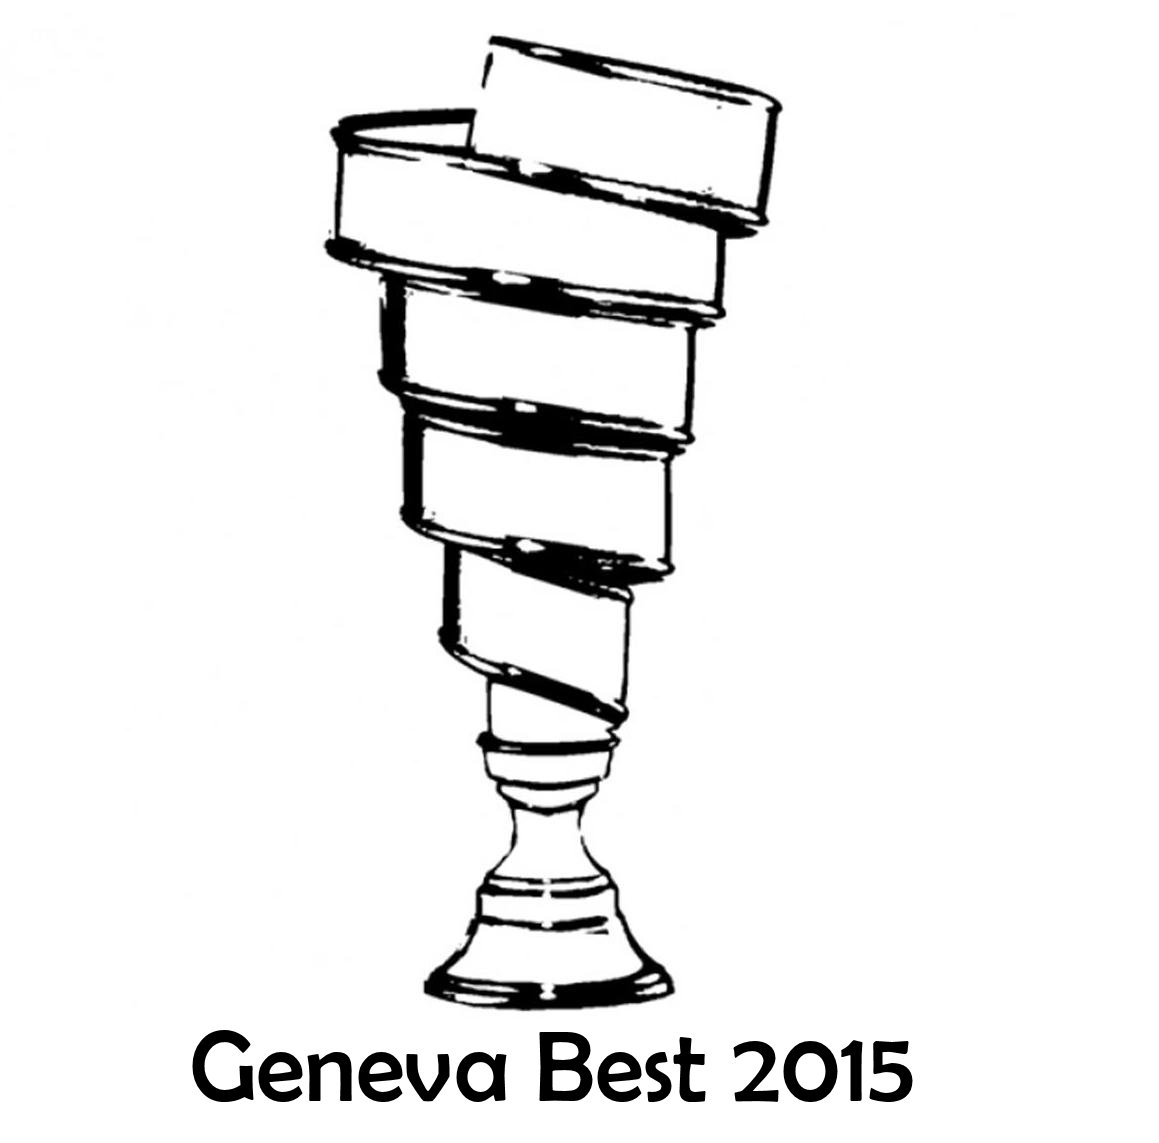 Salone di Ginevra 2015: assegnati i premi di Autoappassionati.it